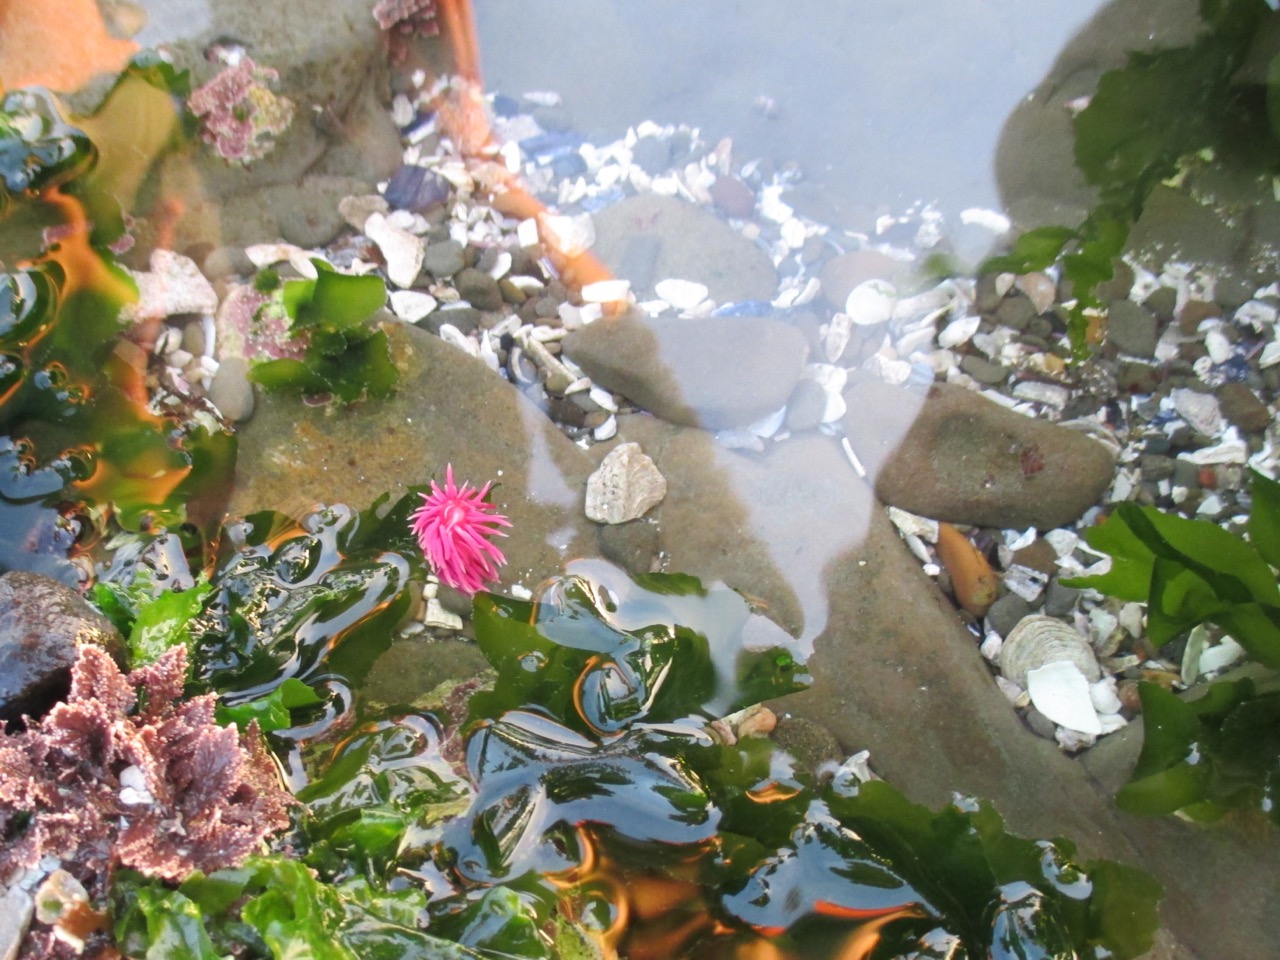 Hopkins rose nudibranch in tide pool at Pillar Point